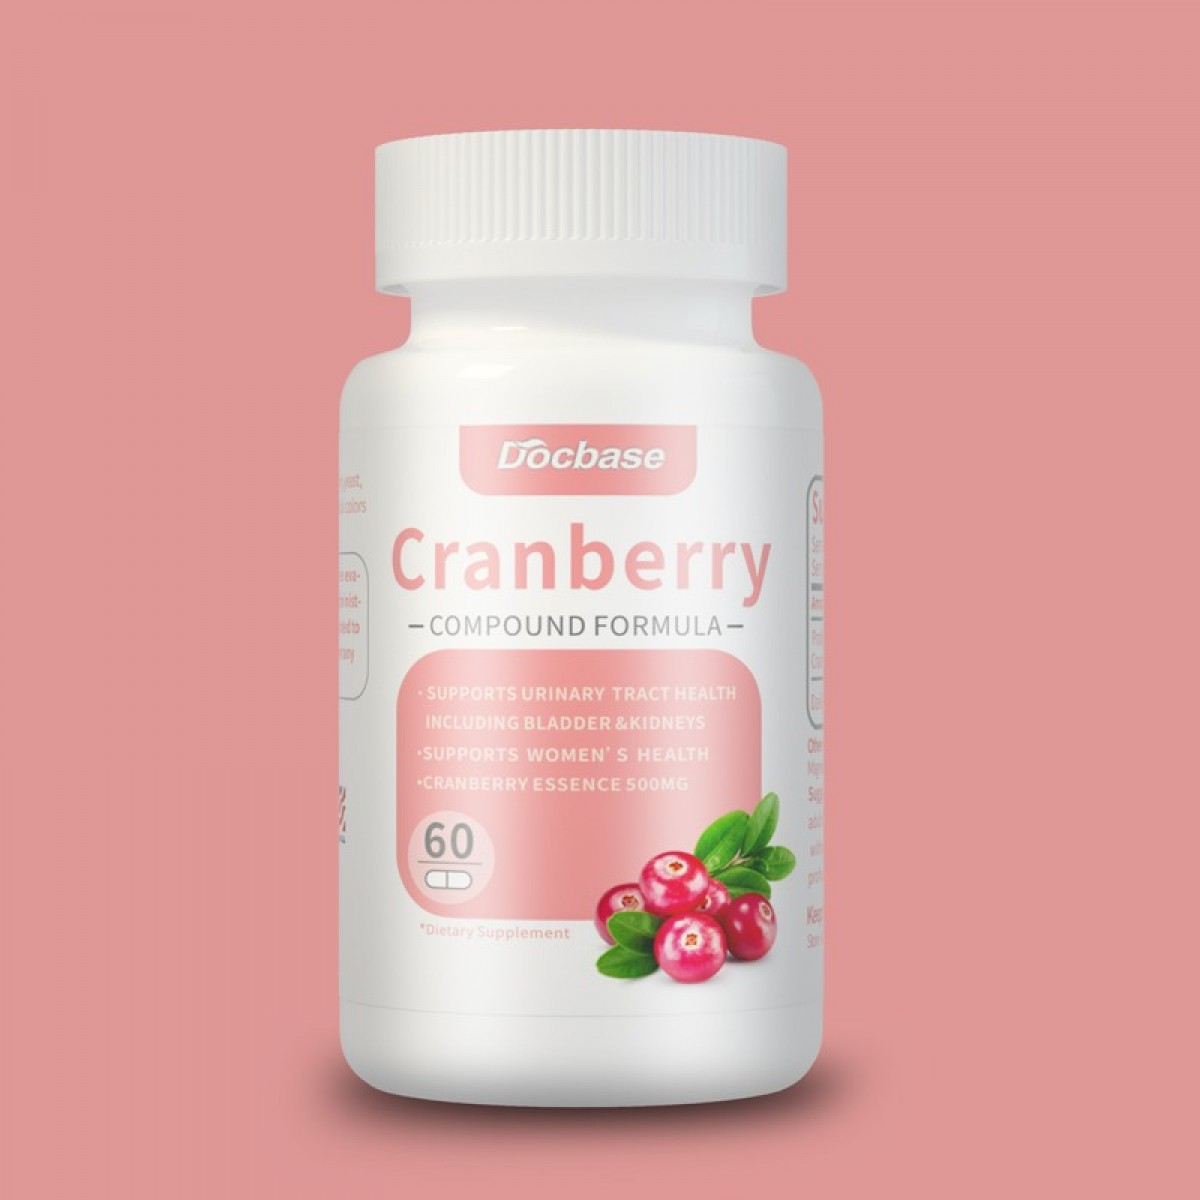 Docbase｜Cranberry probiotics capsule |care of women urinary tract health & regulation intestinal